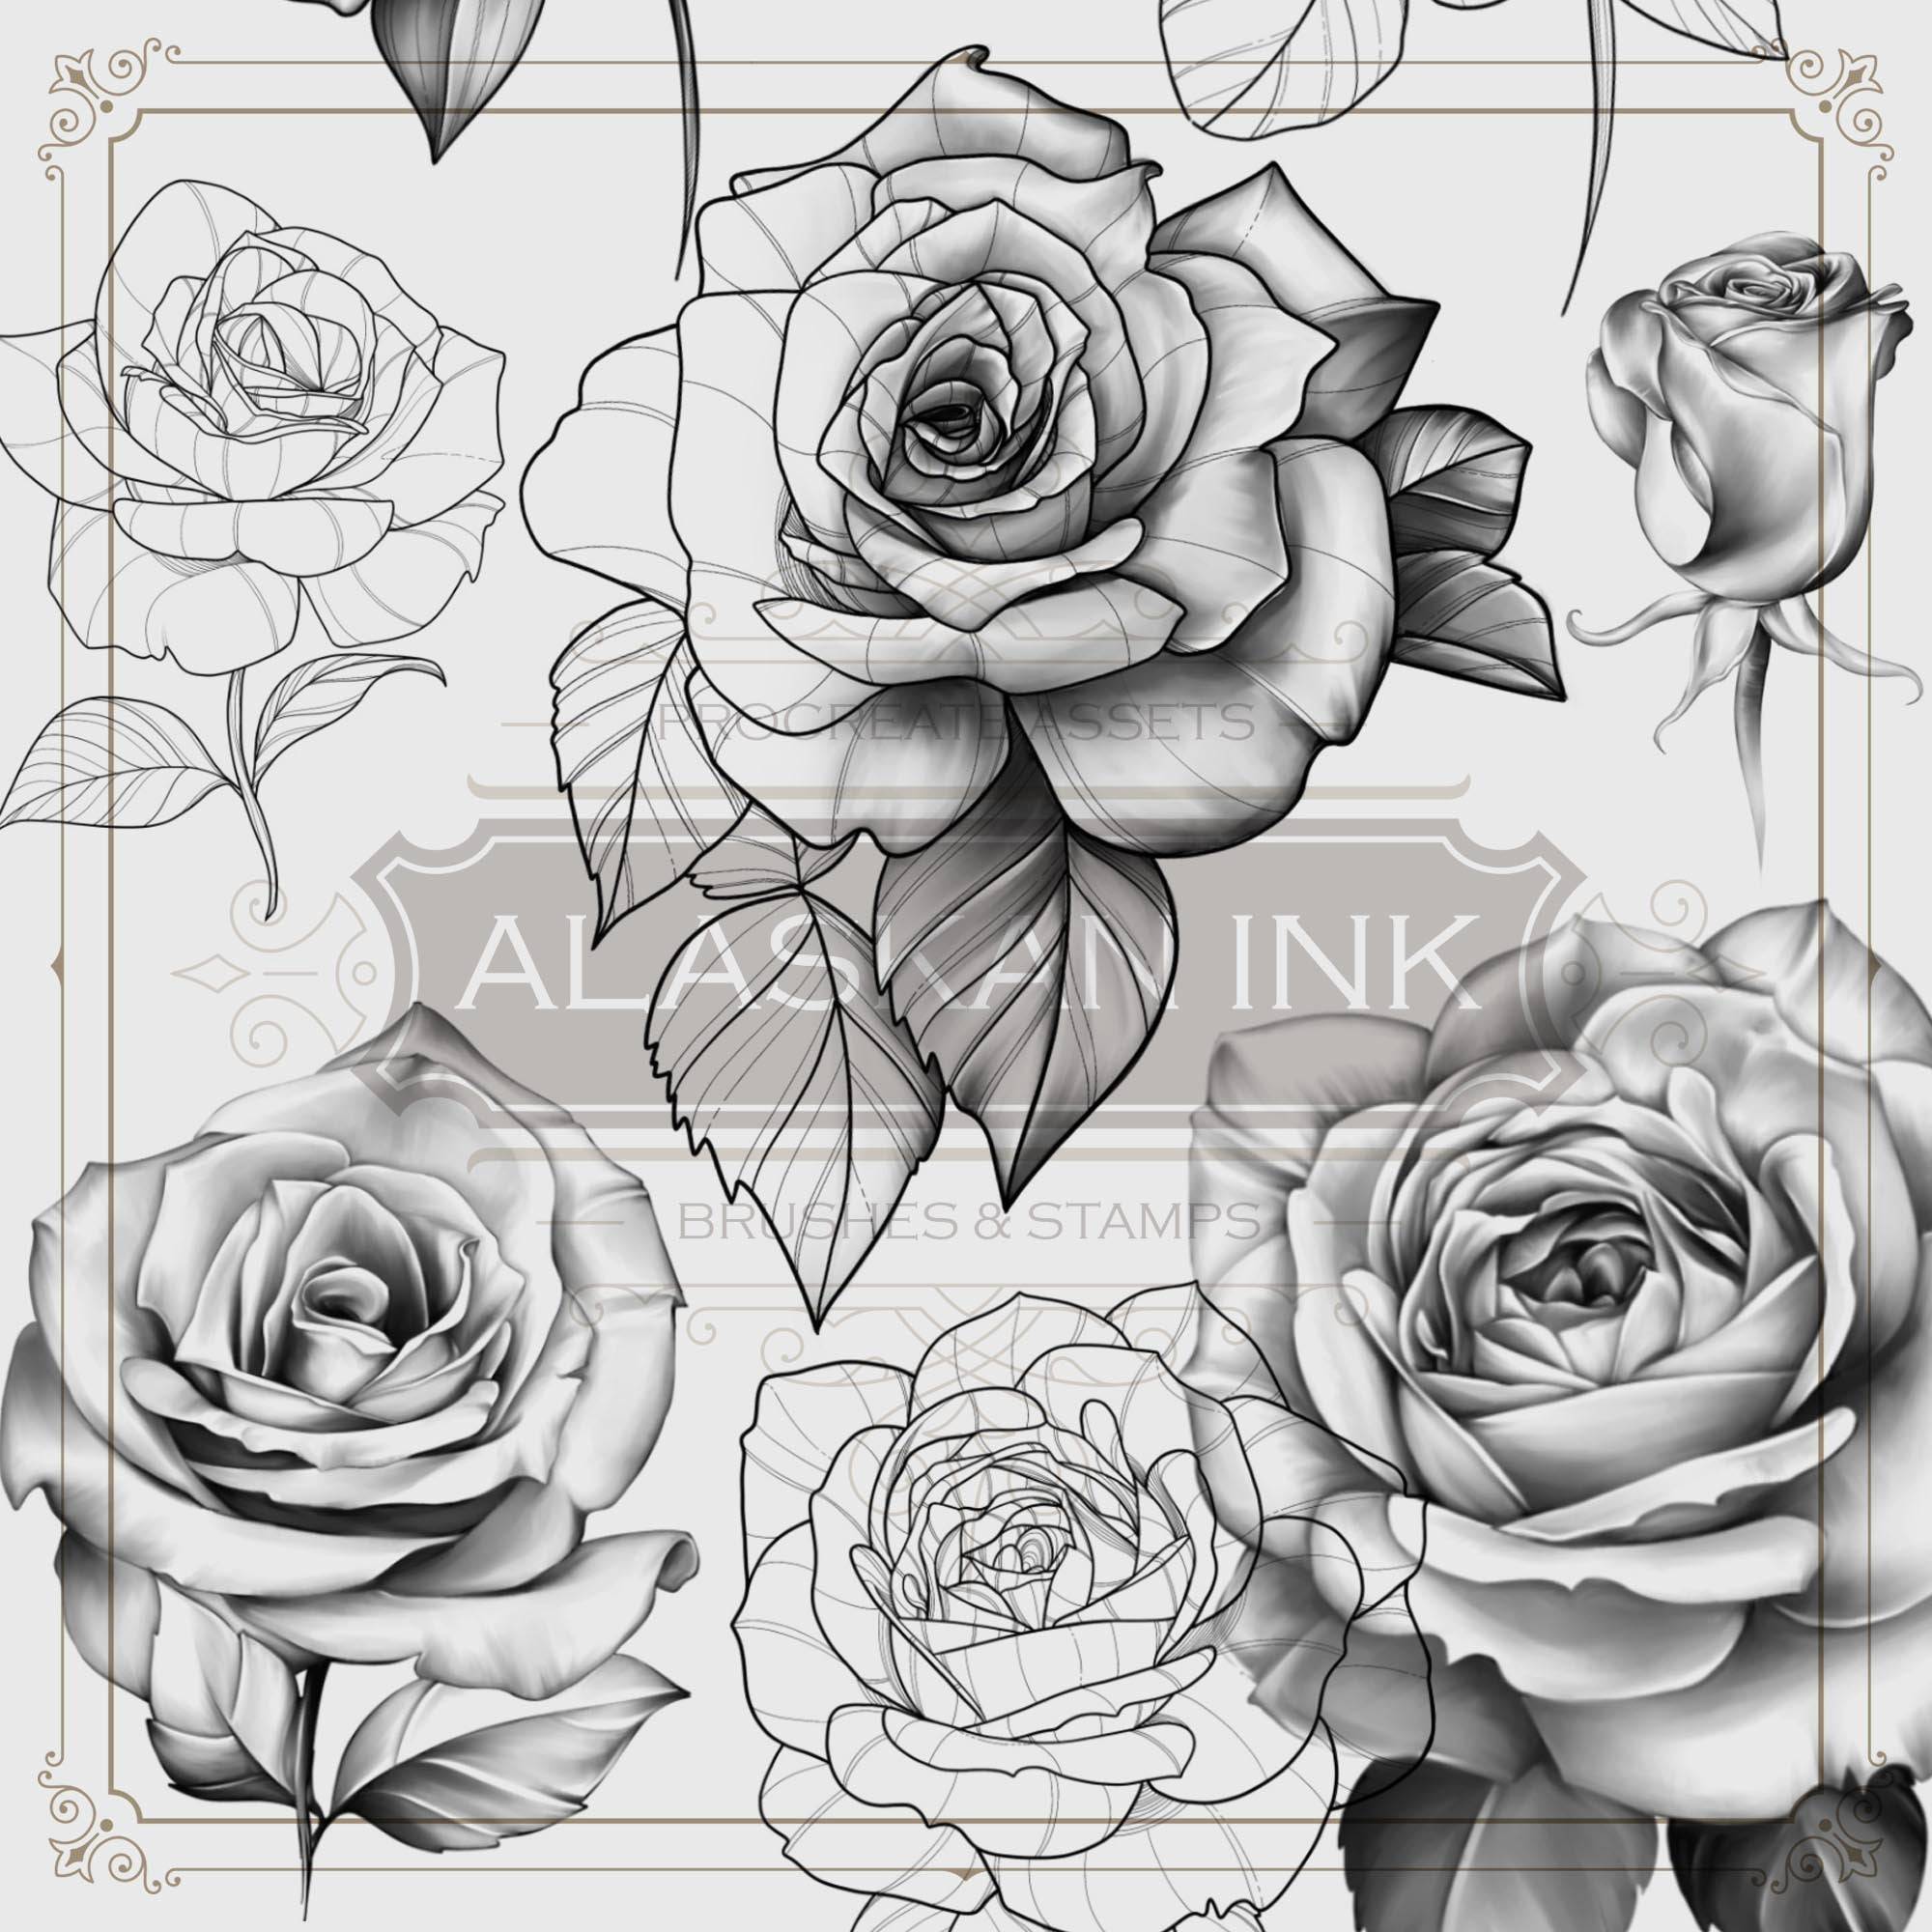 Flores BG | Rose flower tattoos, Realistic rose tattoo, Rose drawing tattoo